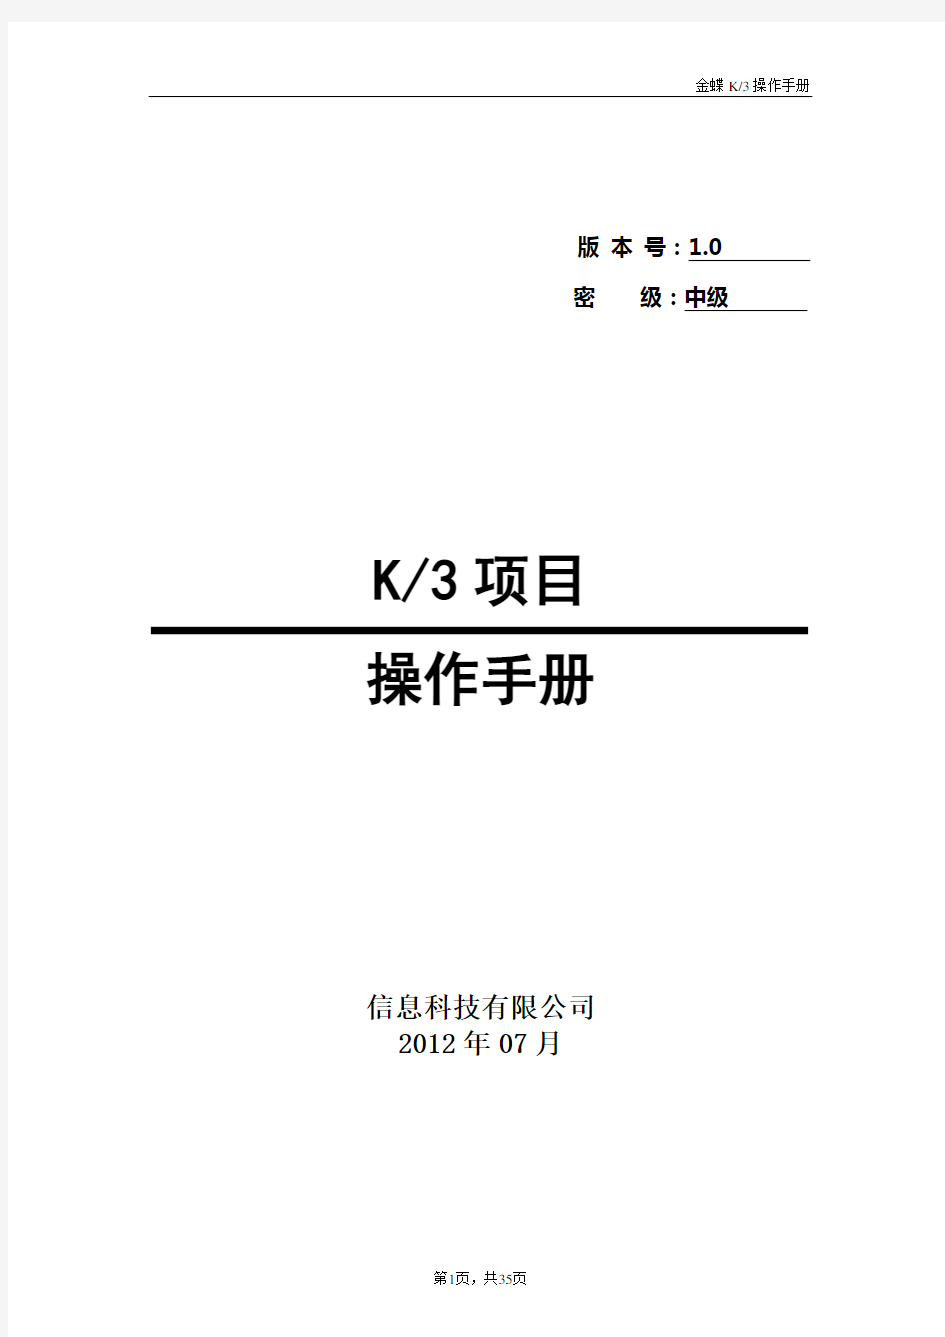 K3操作手册解析